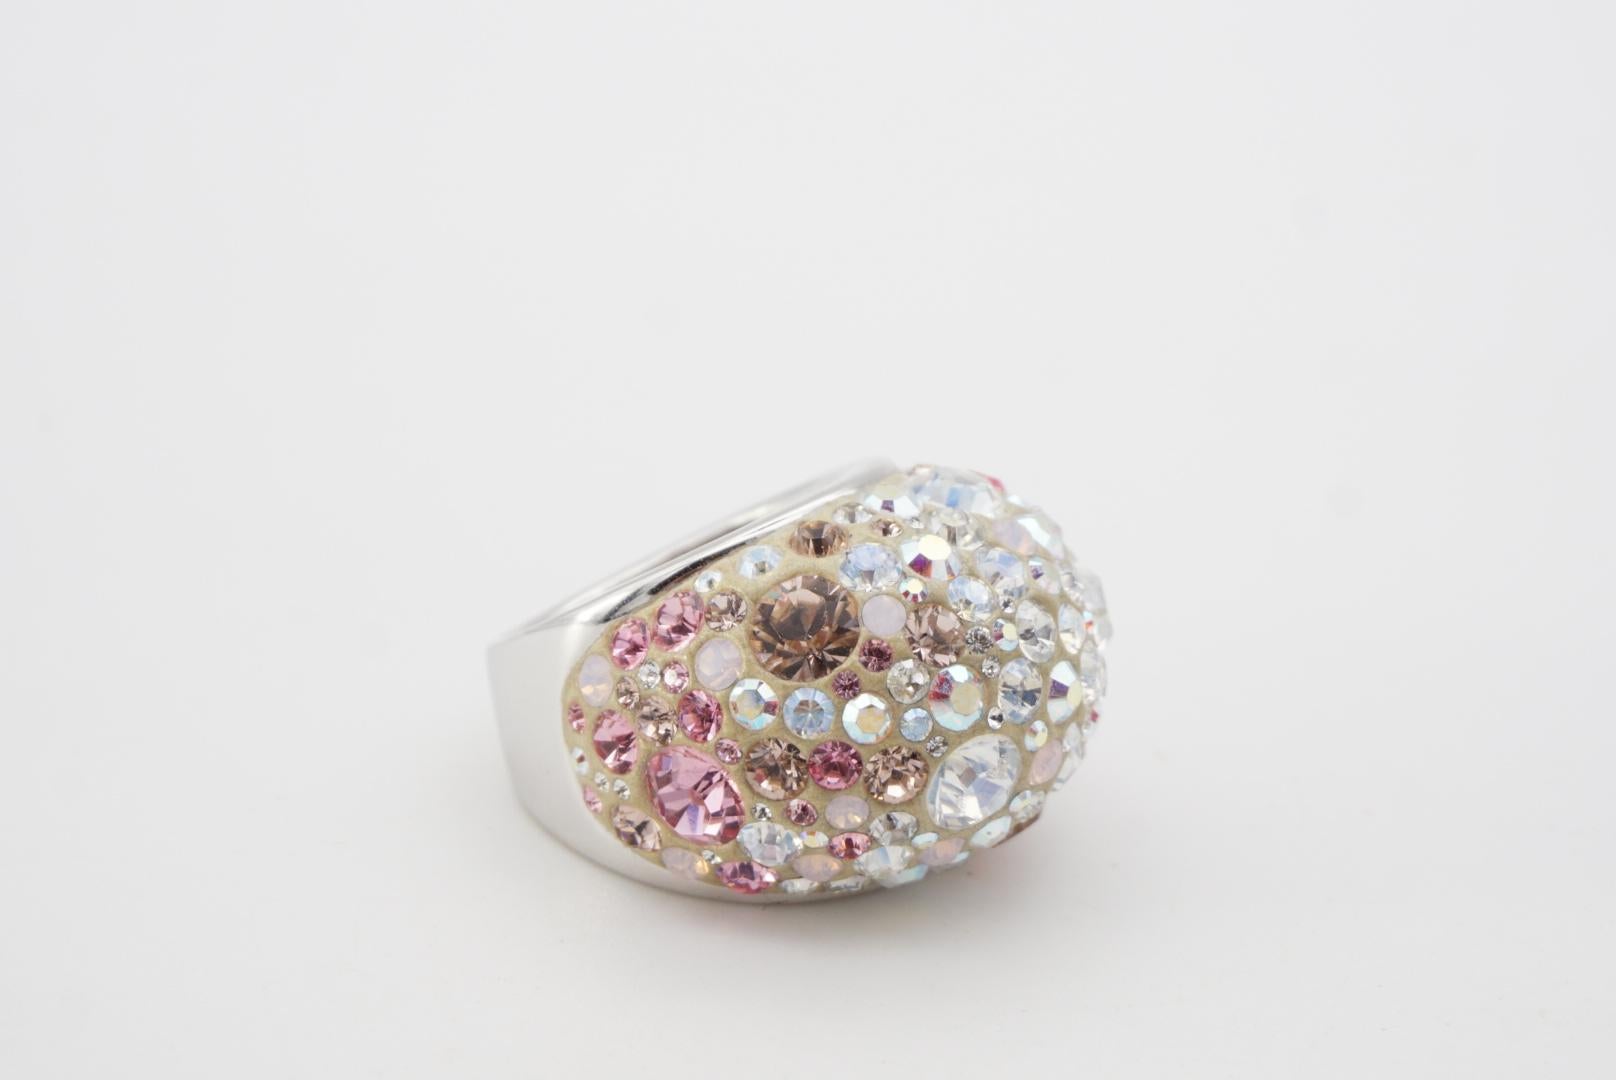 Swarovski Nirvana Fully Cut Crystal Glitter Pink White Chunky Ring, Size 55 UK N For Sale 1